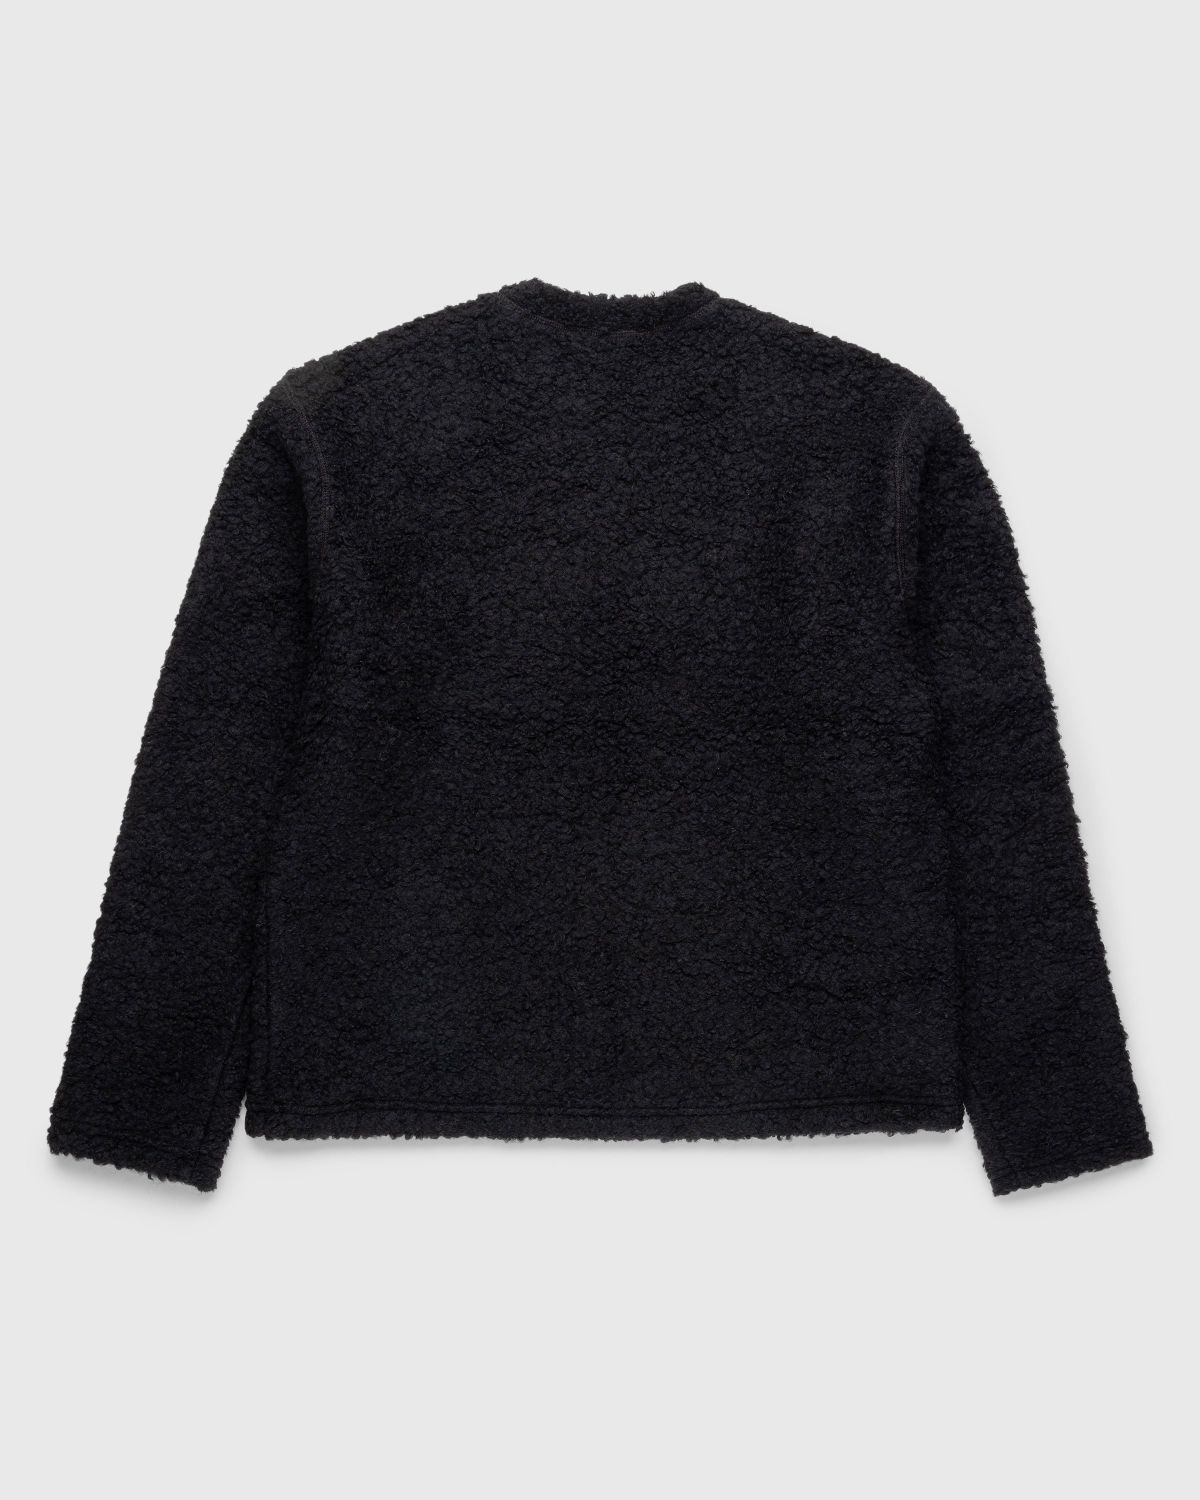 Highsnobiety HS05 – Wool Blend Inlaid Knit Crew Black - Knitwear - Black - Image 2